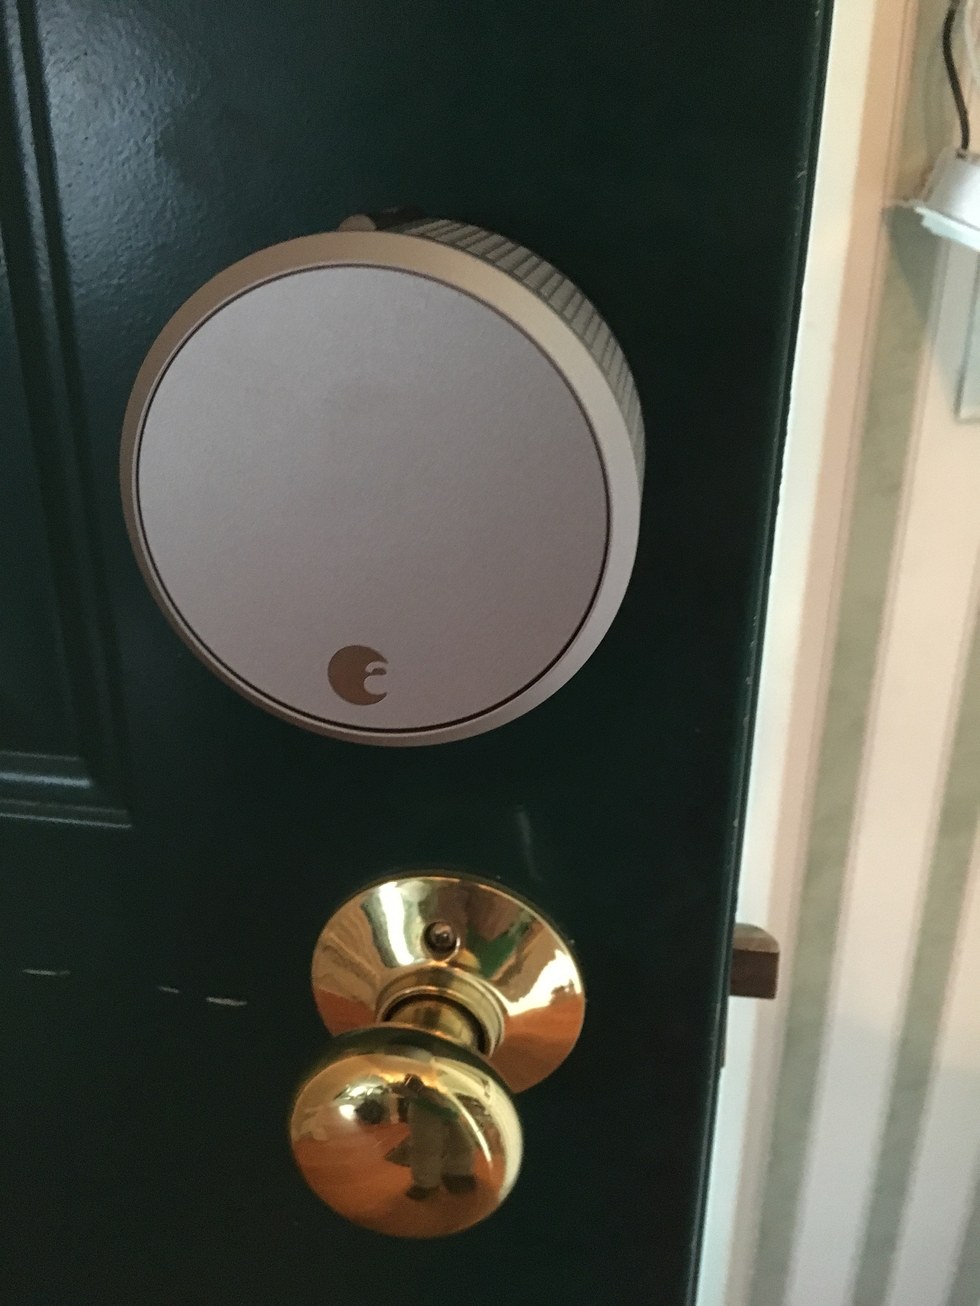 August Home Smart Lock Installed